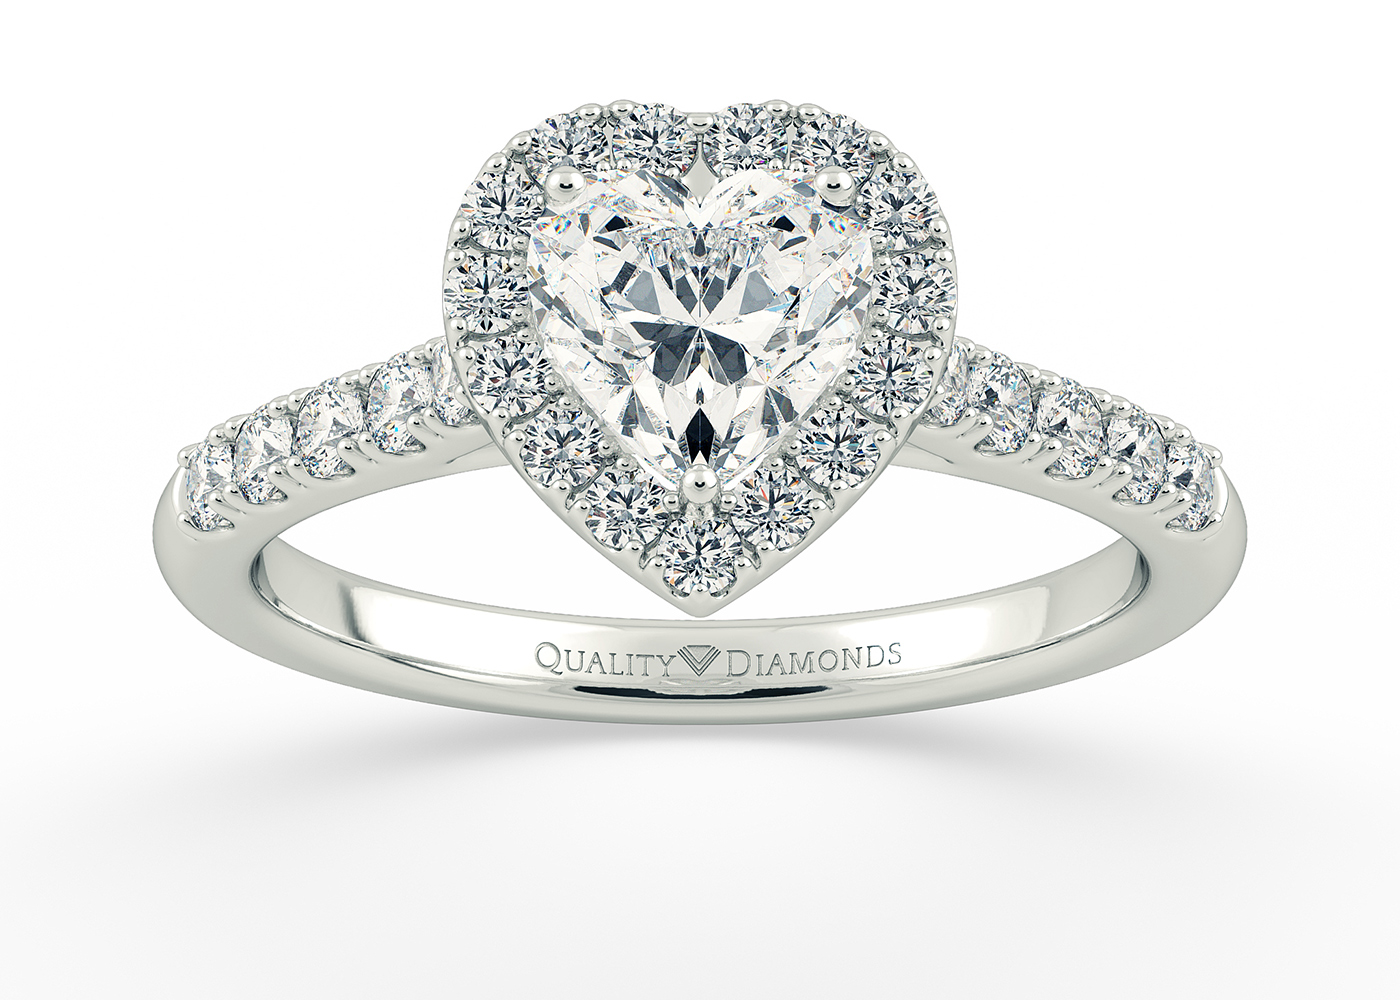 Two Carat Halo Heart Diamond Ring in Platinum 950